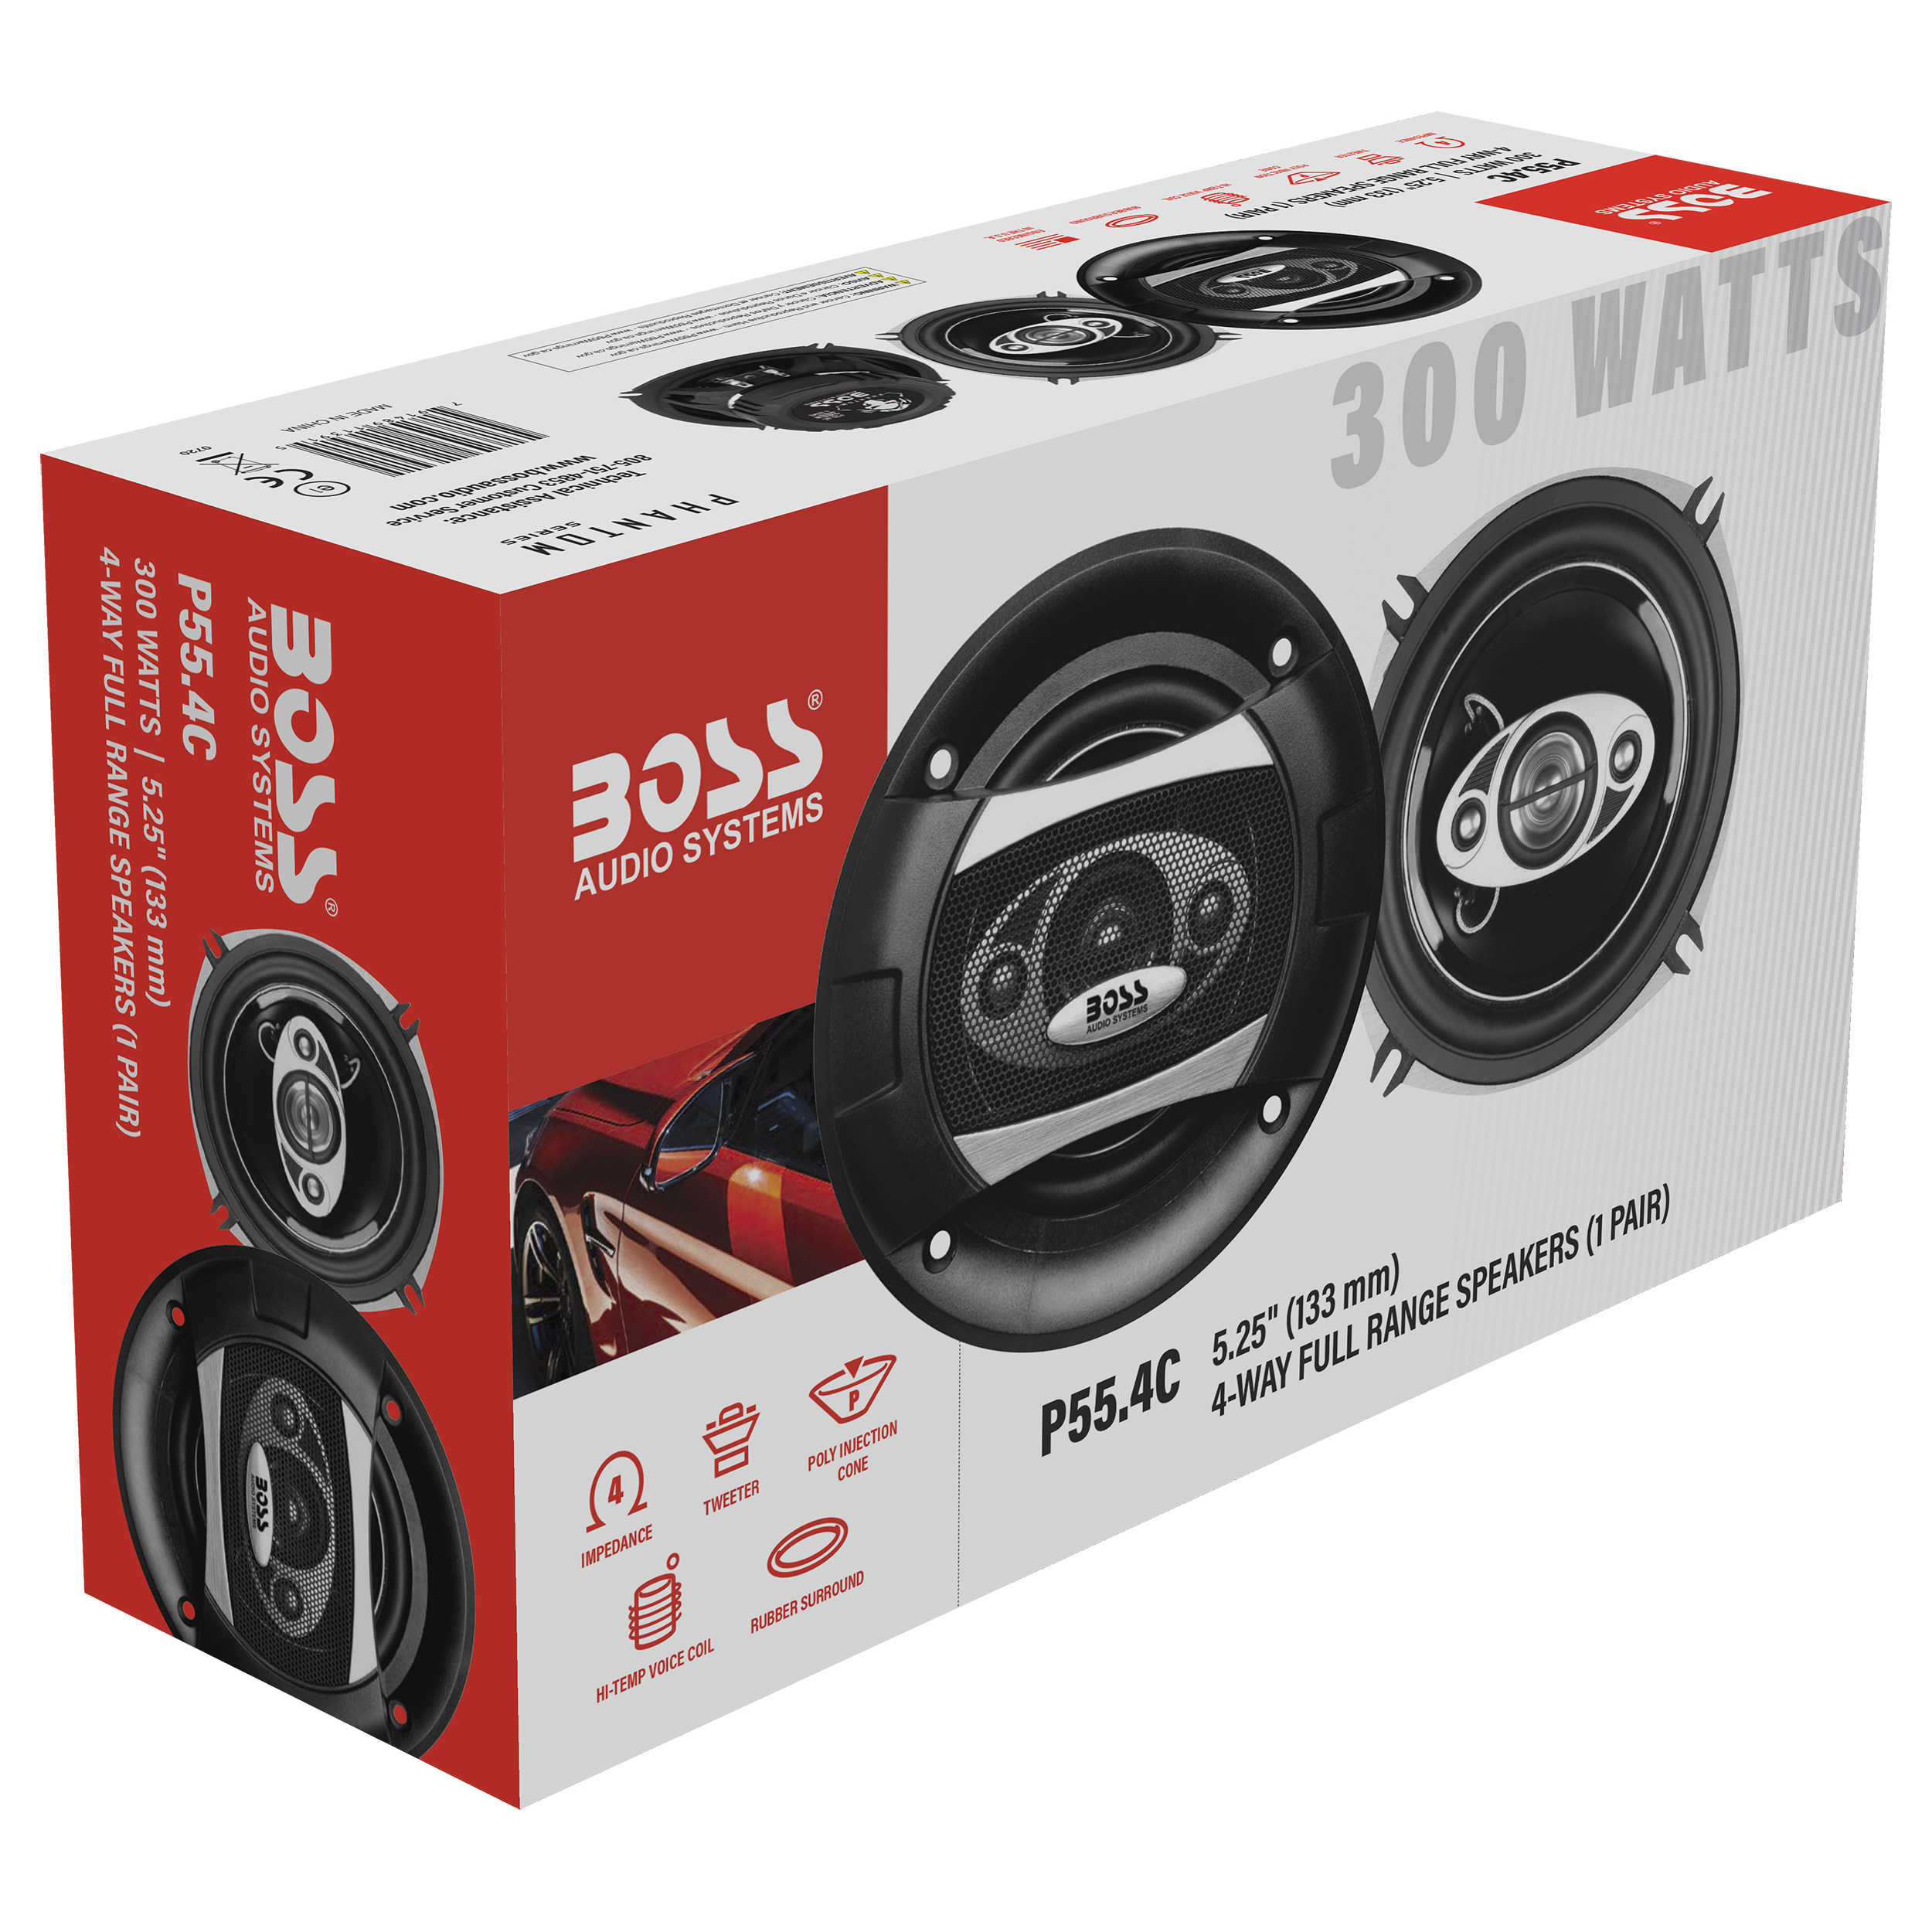 BOSS Audio Systems P55.4C Phantom Series 5.25 Inch Car Stereo Door Speakers - 300 Watts Max, 4 Way, Full Range Audio, Tweeters, Coaxial, Sold in Pairs - image 1 of 13